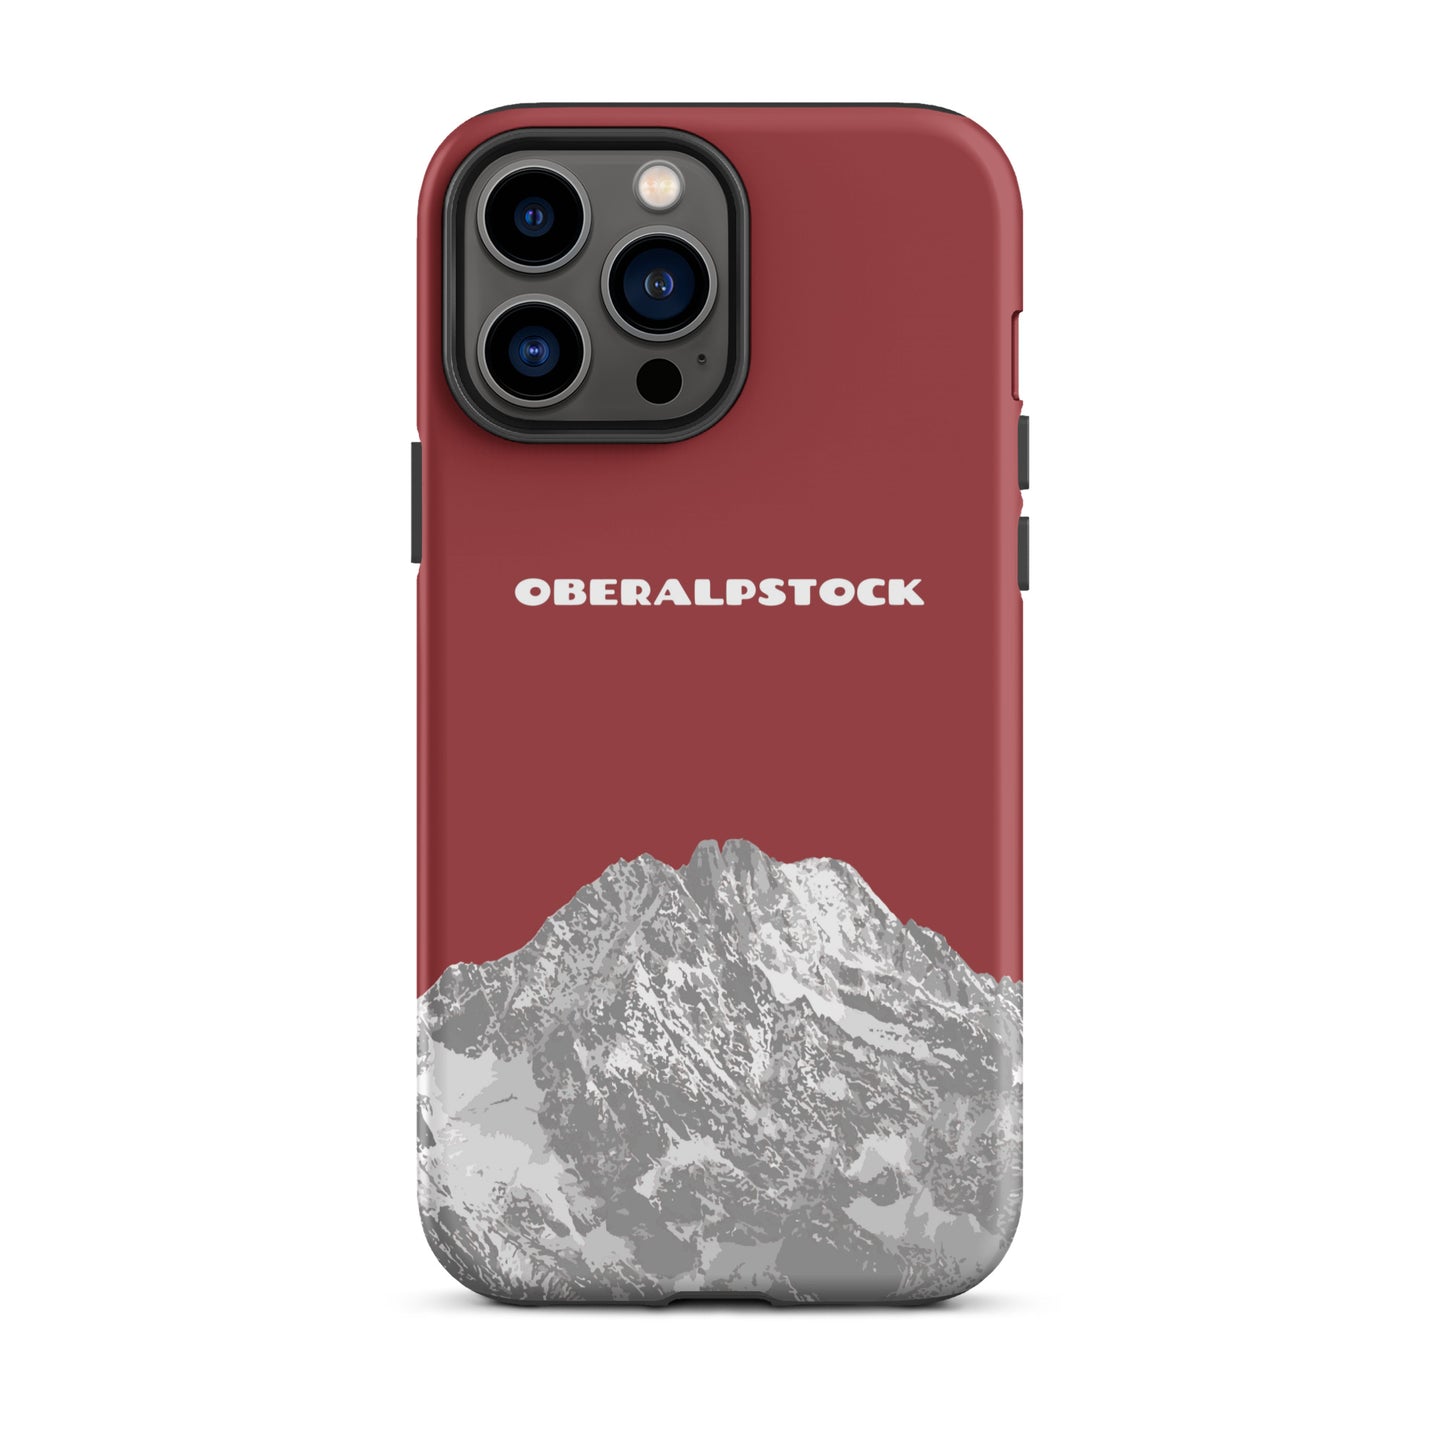 iPhone Case - Oberalpstock- Rot